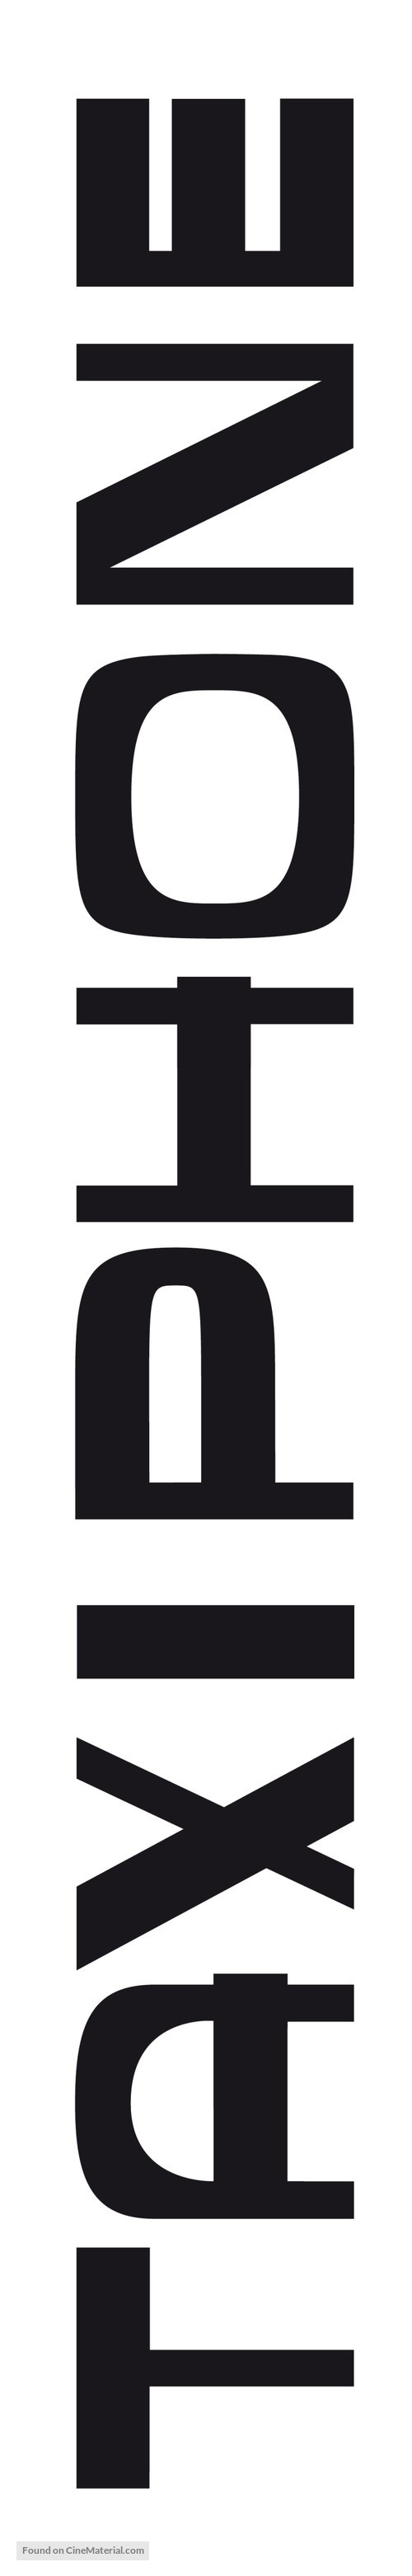 Taxiphone - Swiss Logo